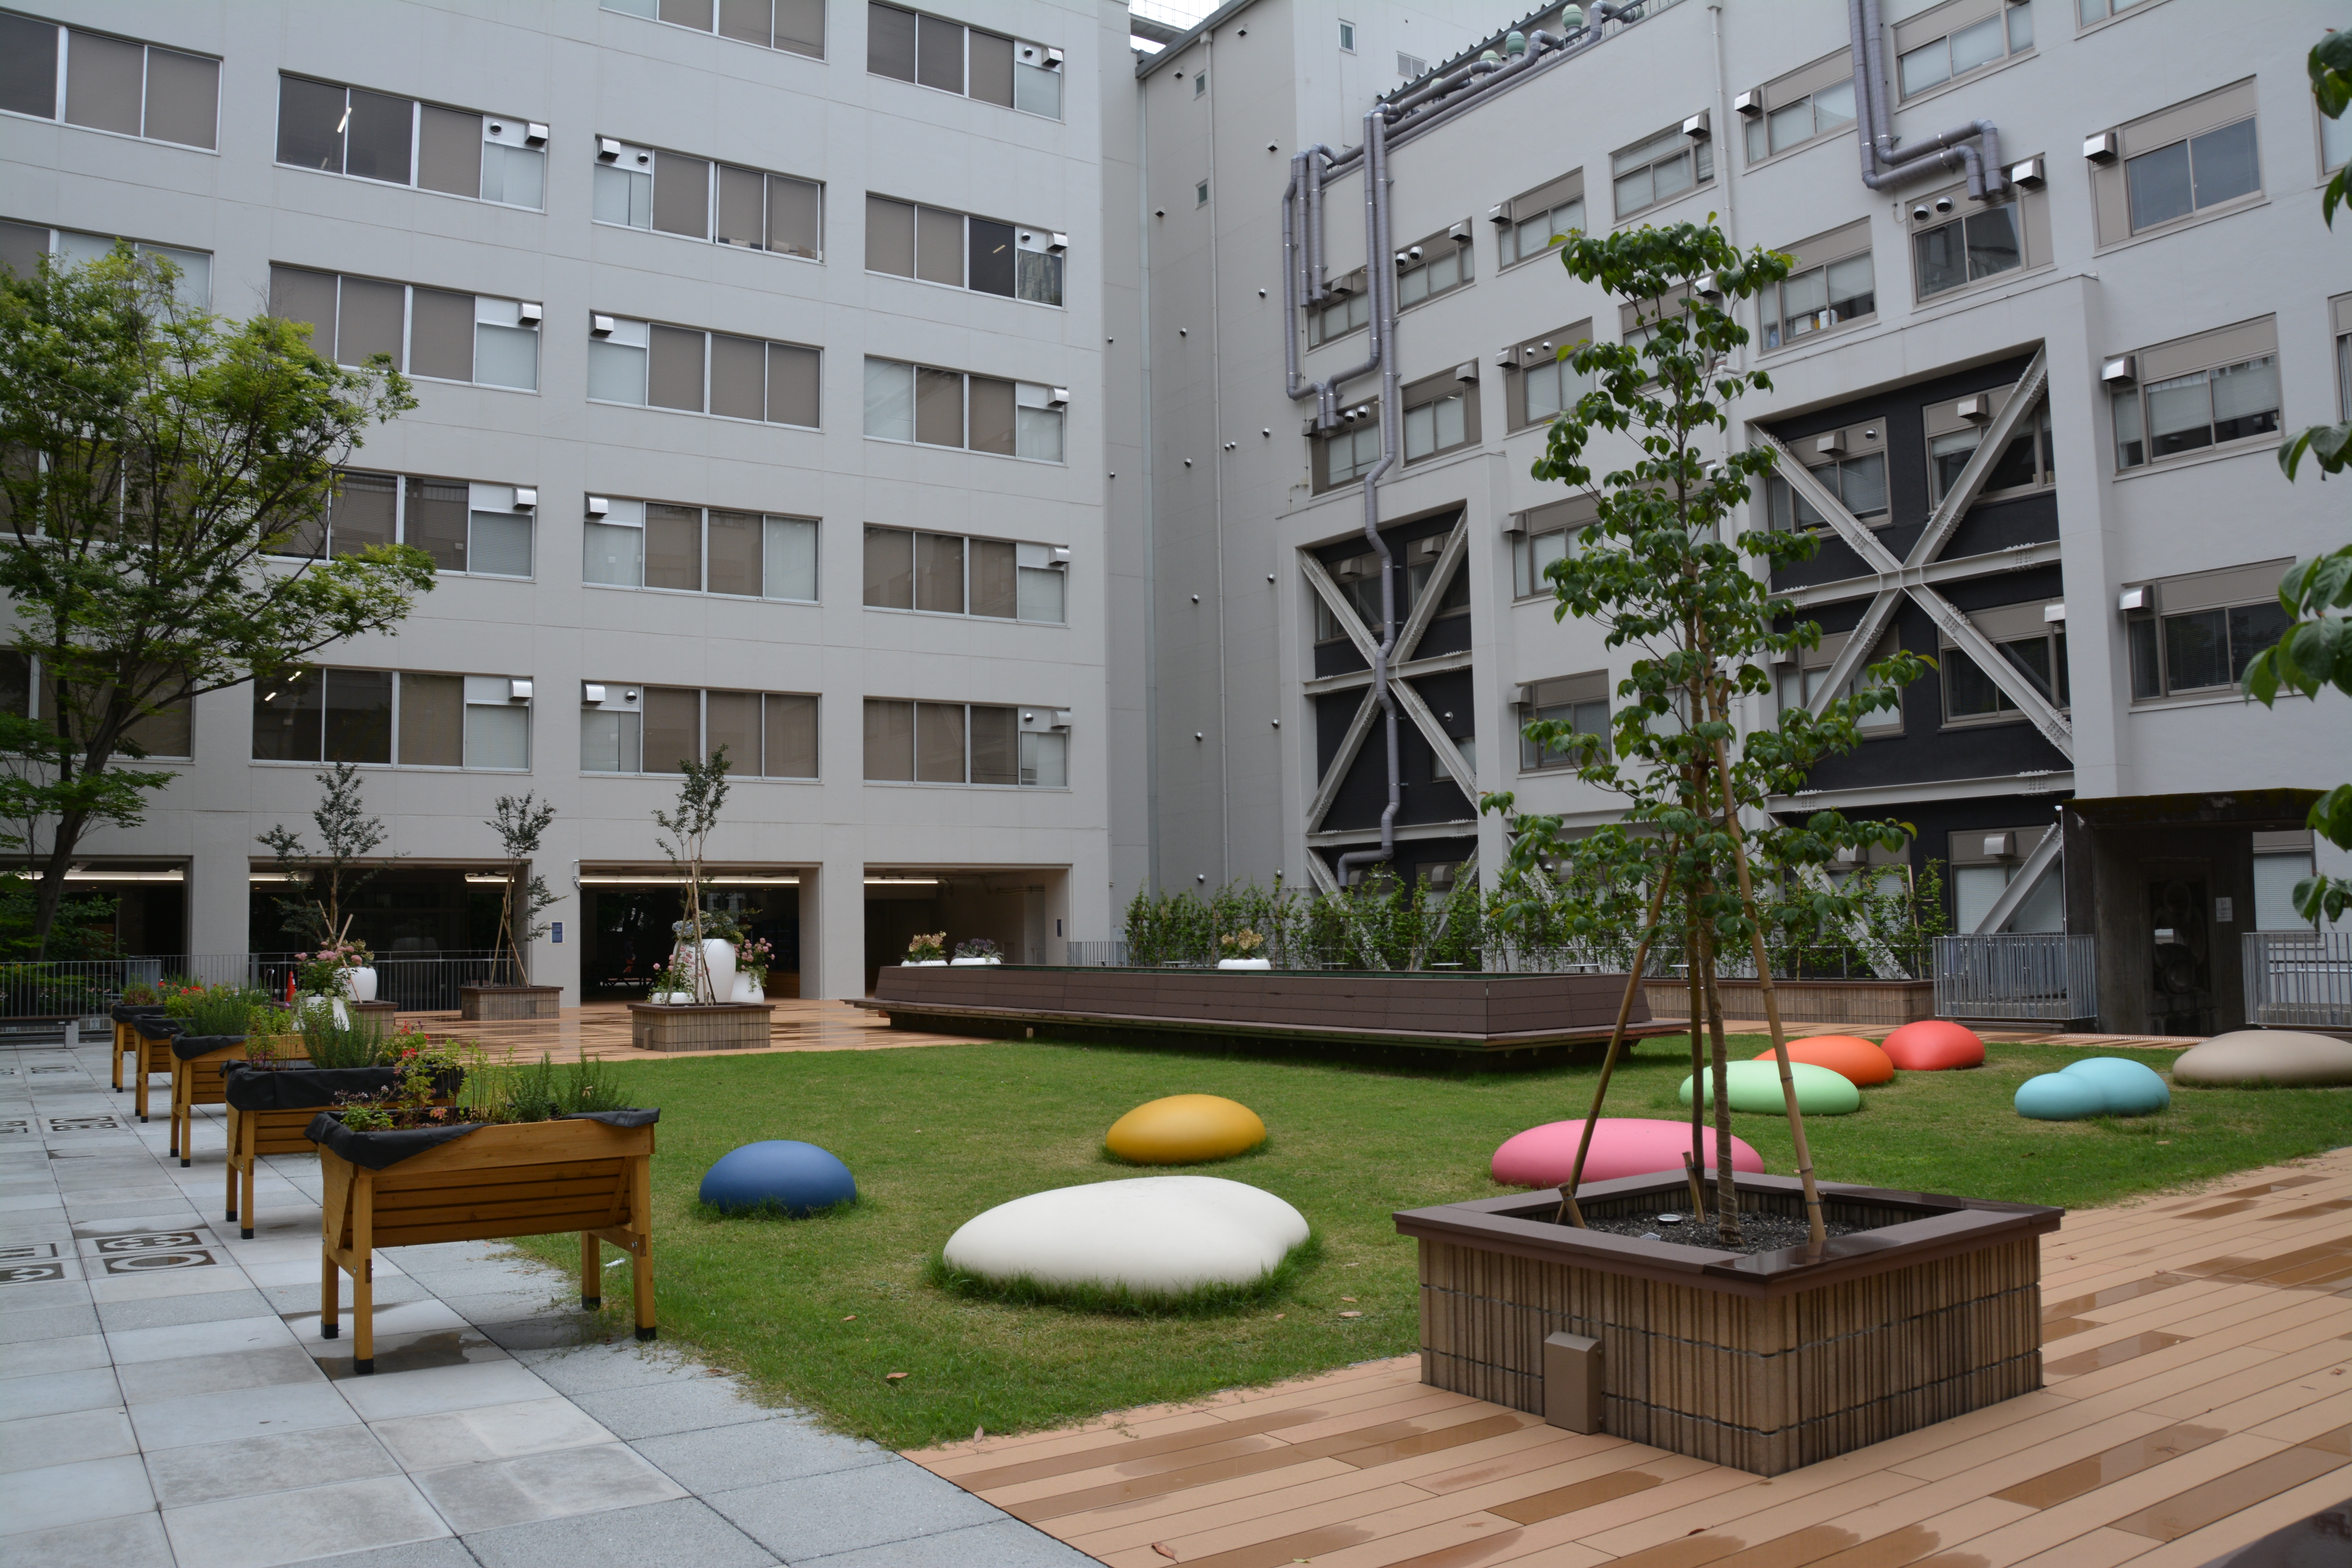 Rooftop Garden Completed Above Building No. 9’s Active Commons Student Staff: Shoji, Yamamoto, Hashino, Kori, Nakai